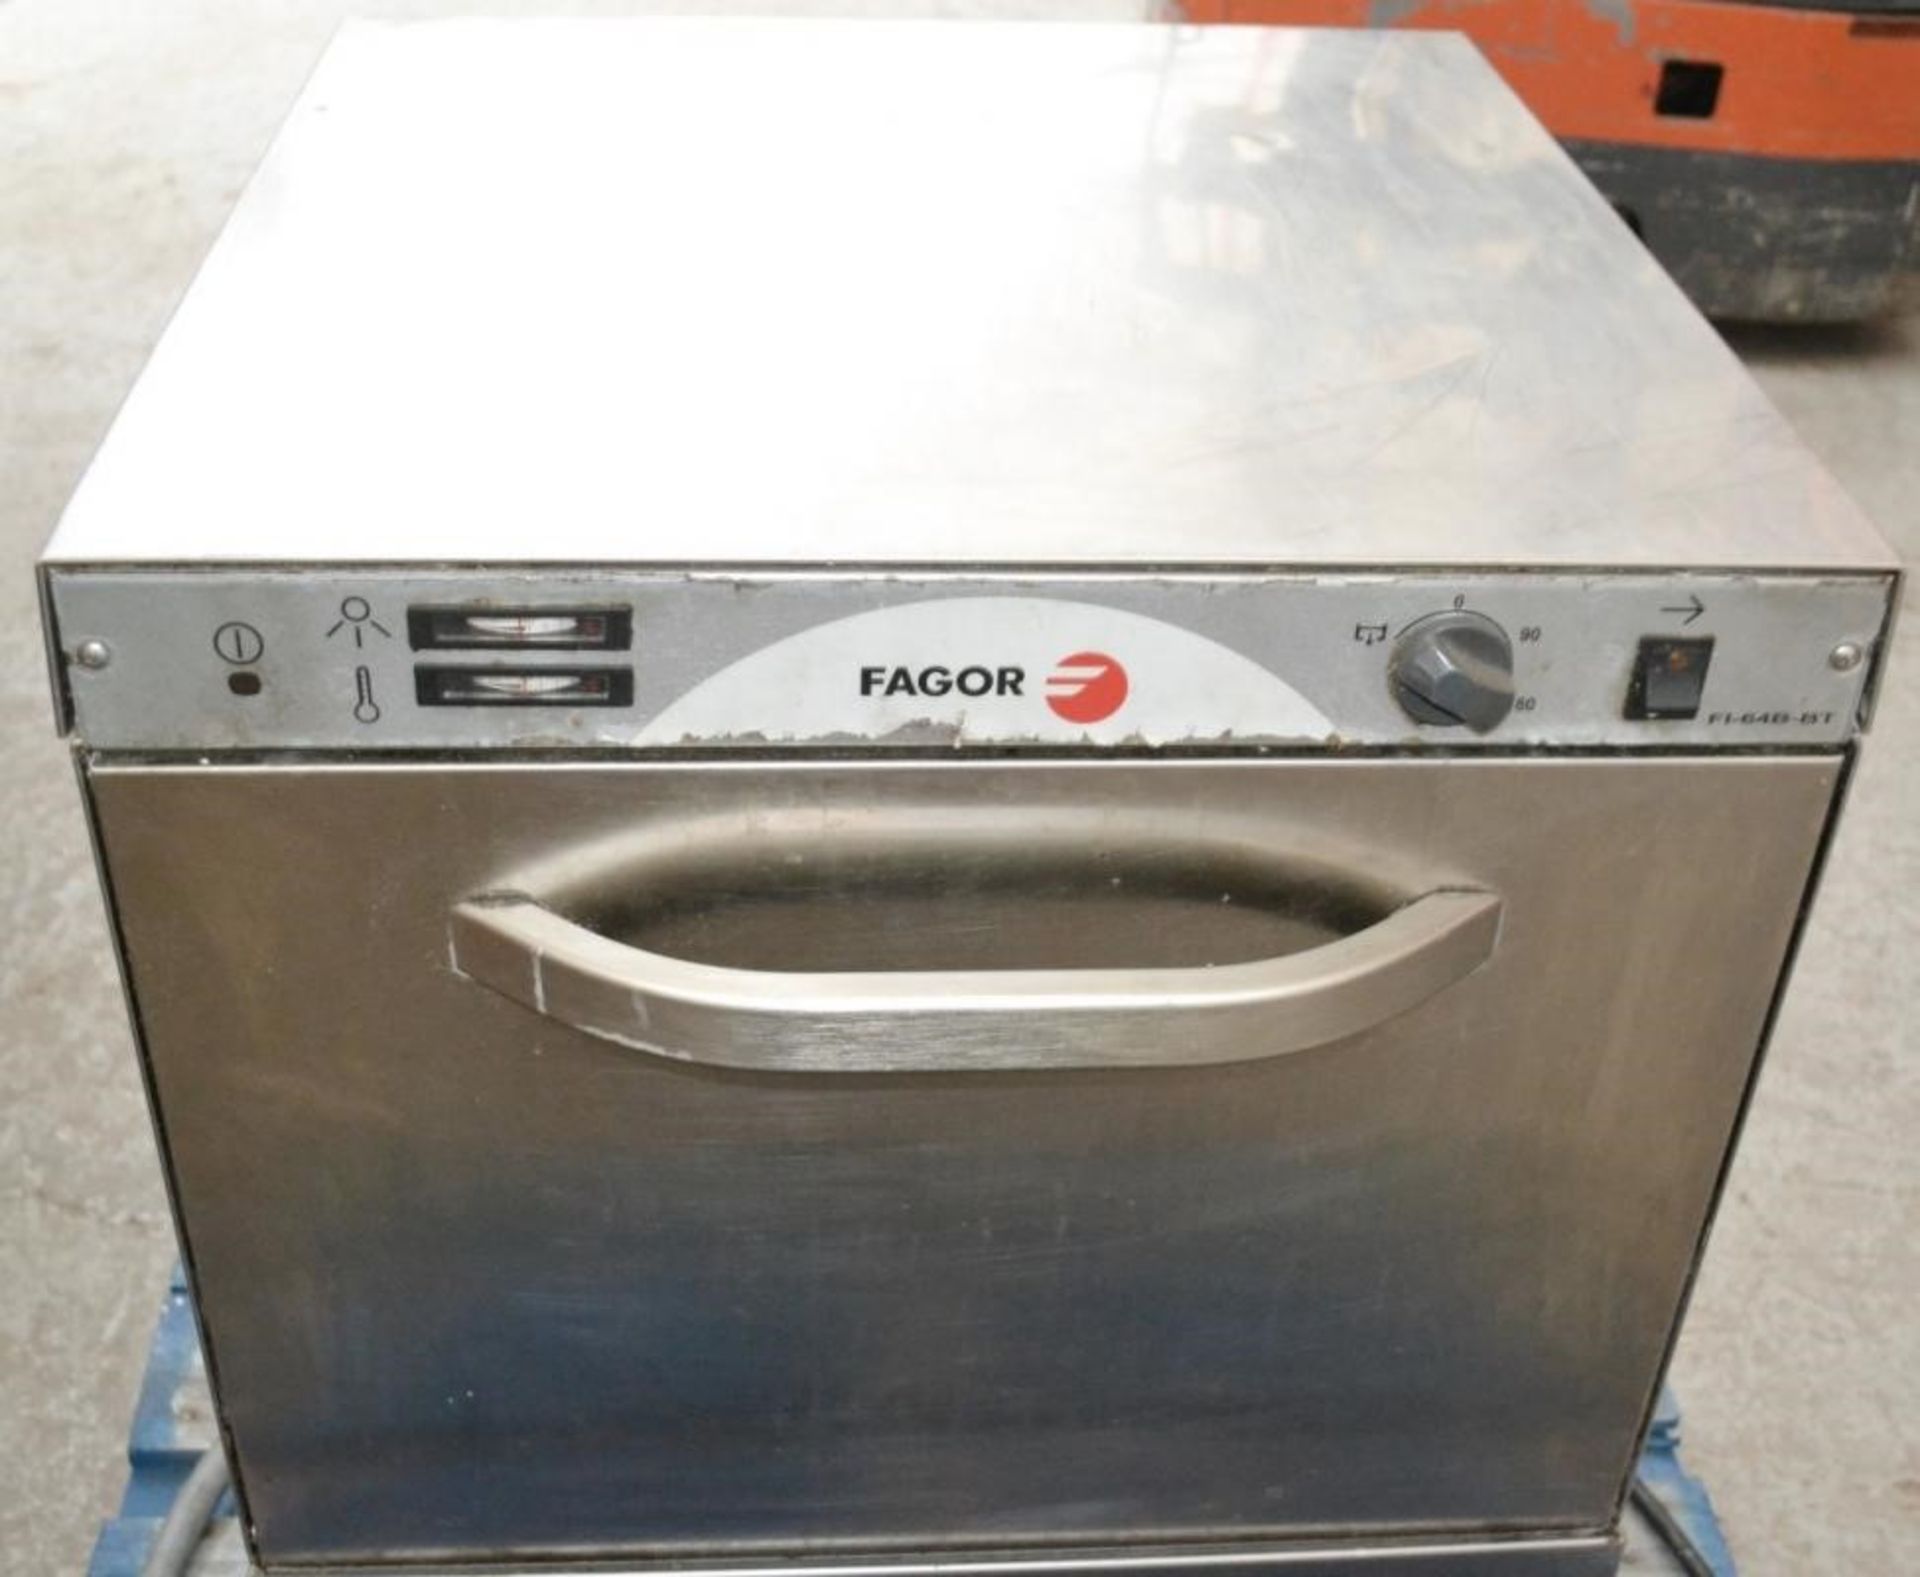 1 x FAGOR Dishwasher - Model: FI-64B-BT - Dimensions: H82 x W59.5 x D66cm - Ref: LH256 - CL261 - Loc - Image 3 of 12